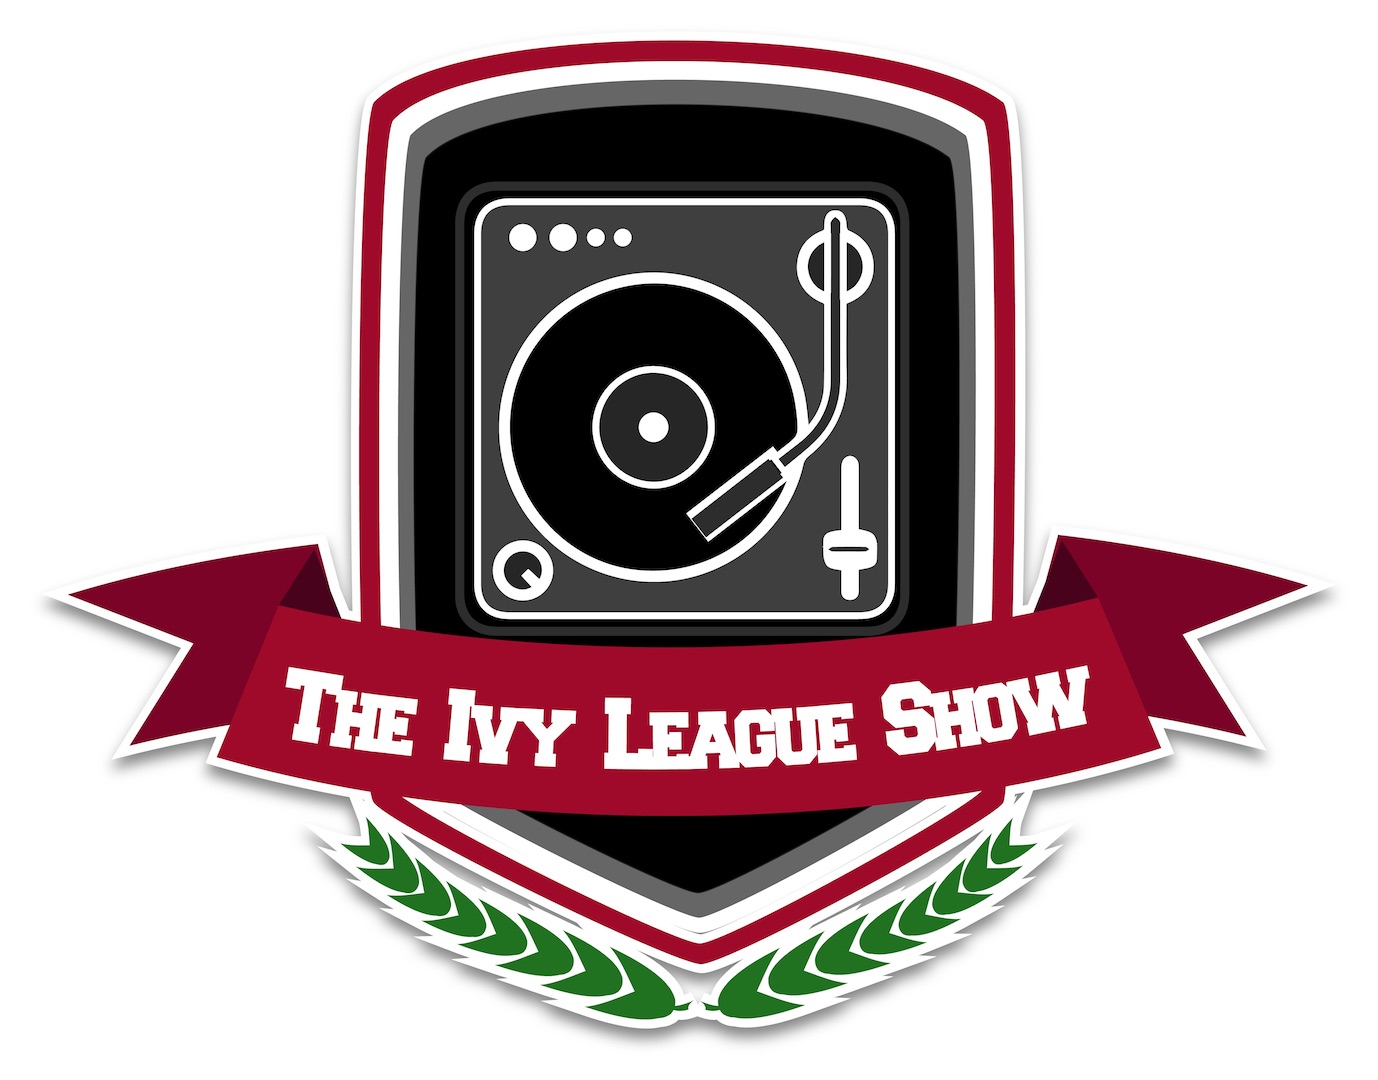 Ivy League show logo shield